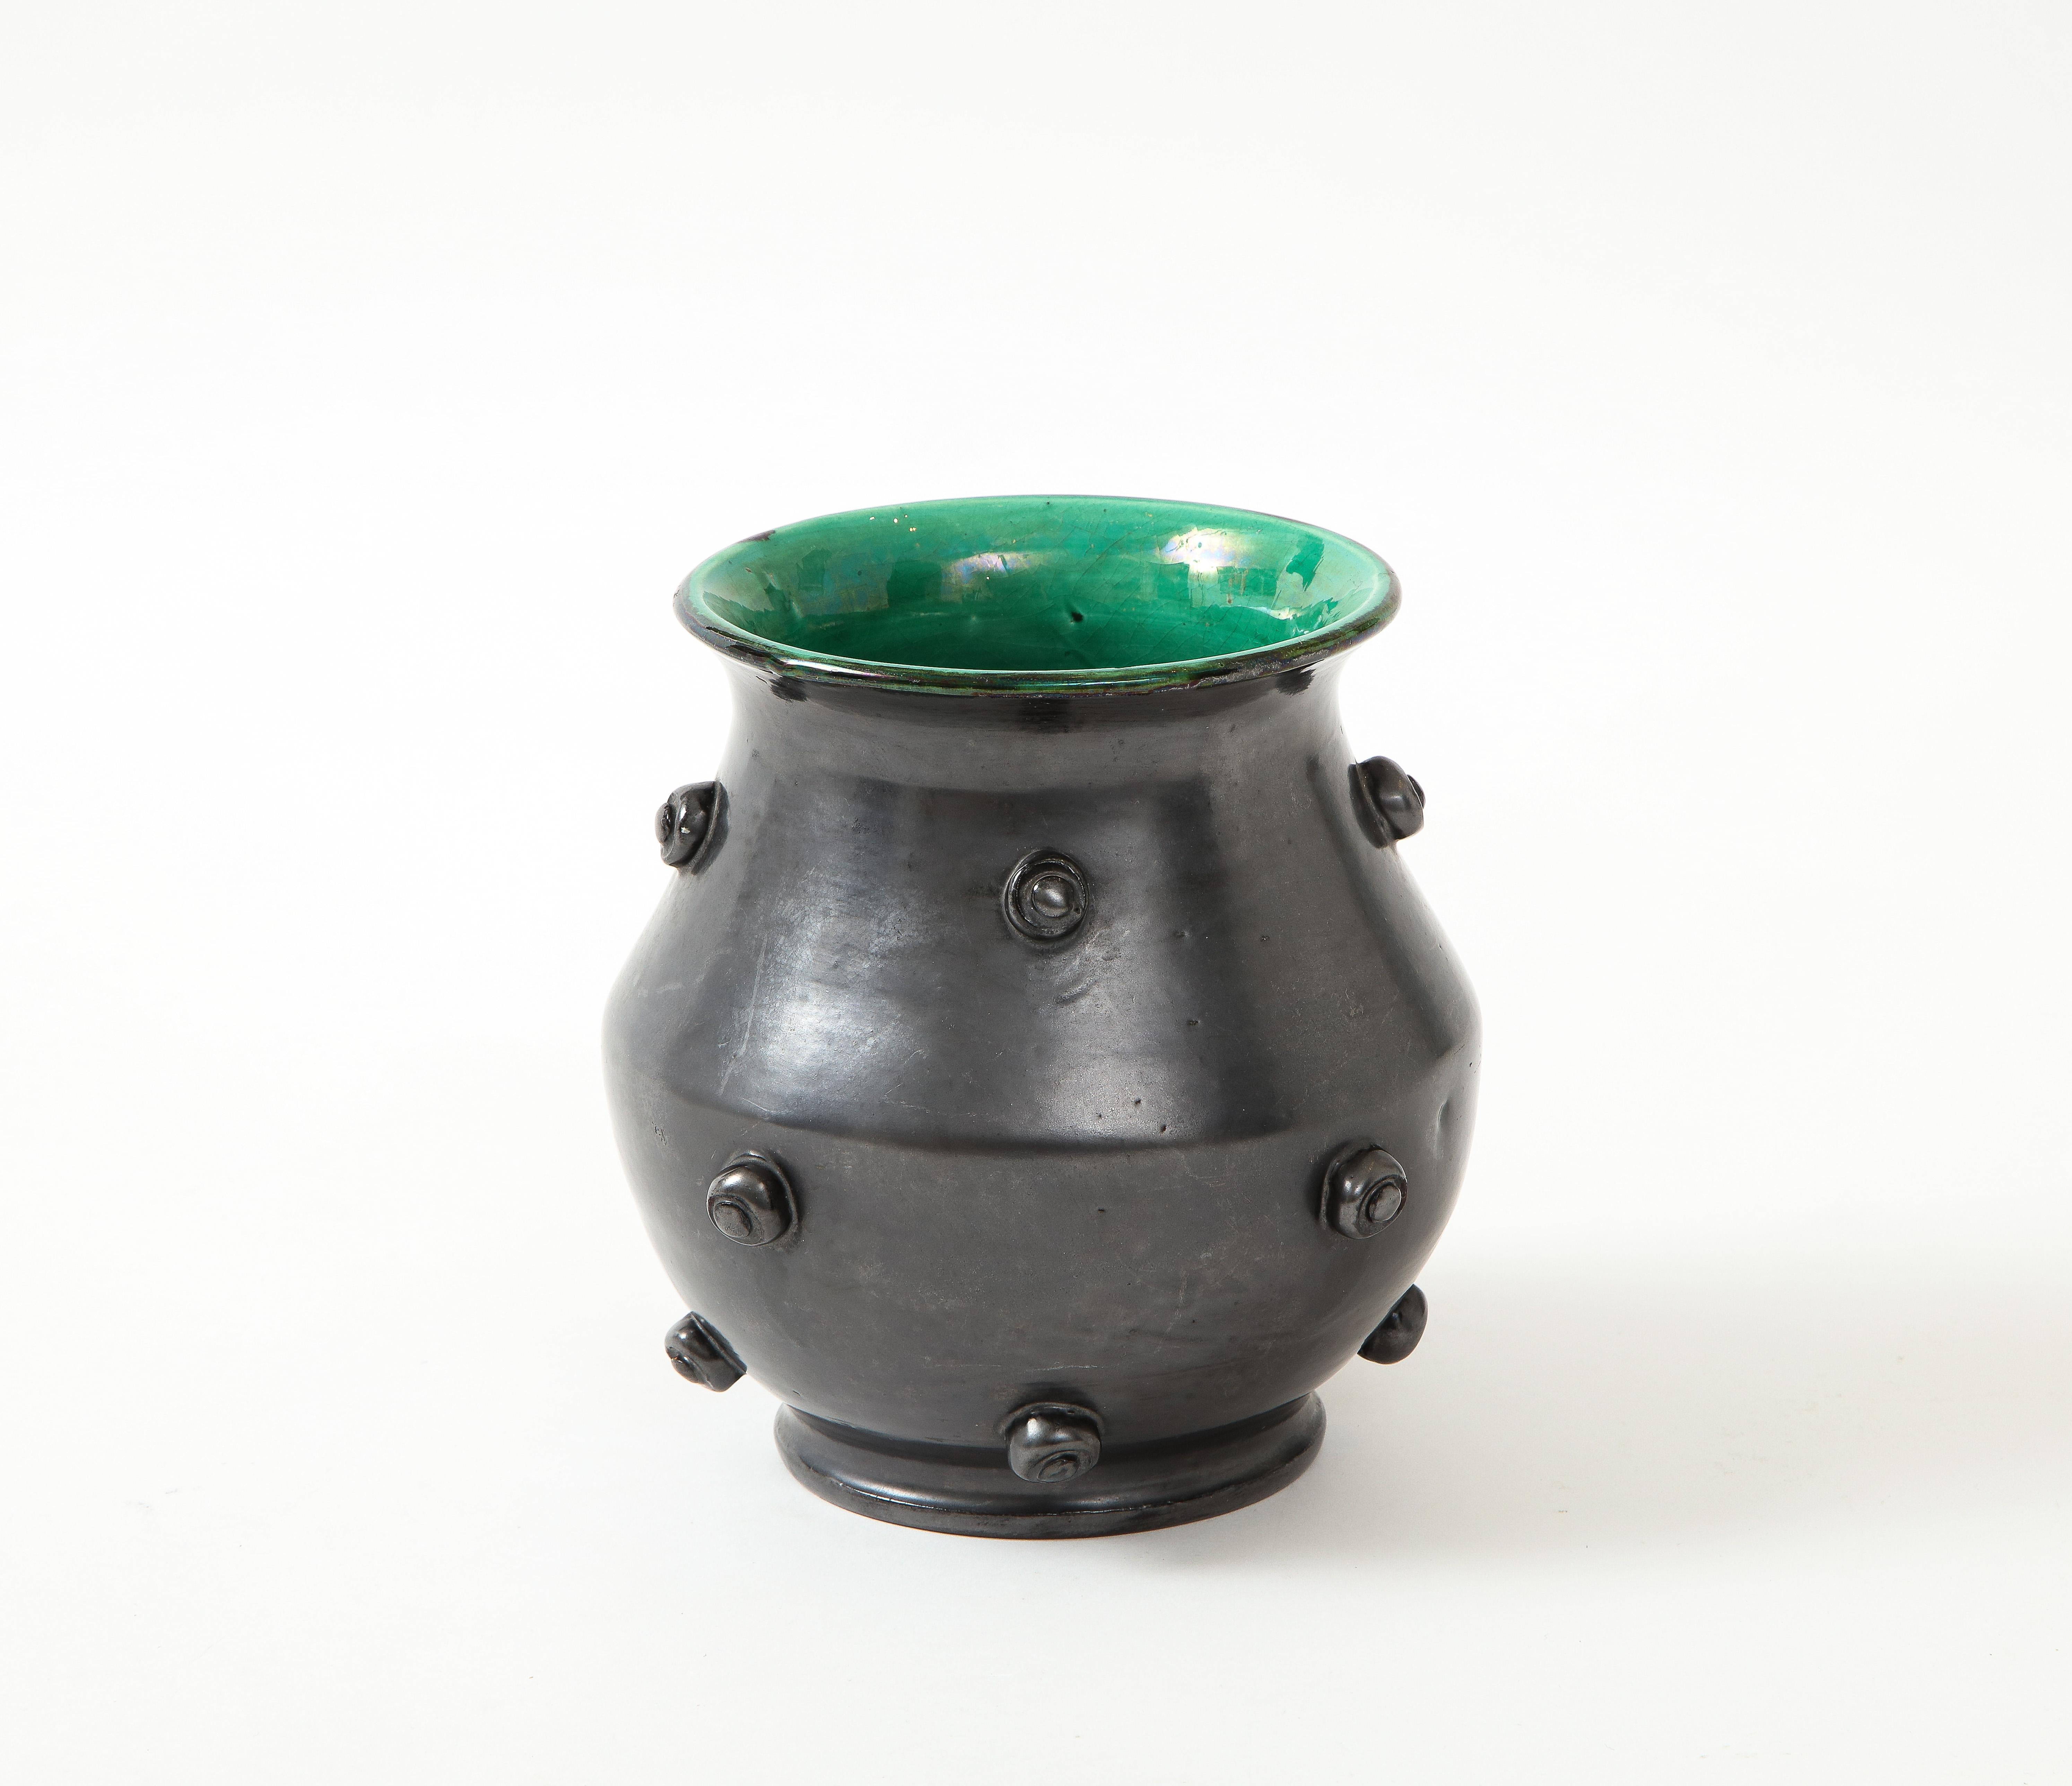 Matteblack glaze ceramic vase w/ green crackle interior, France, c. 1950.